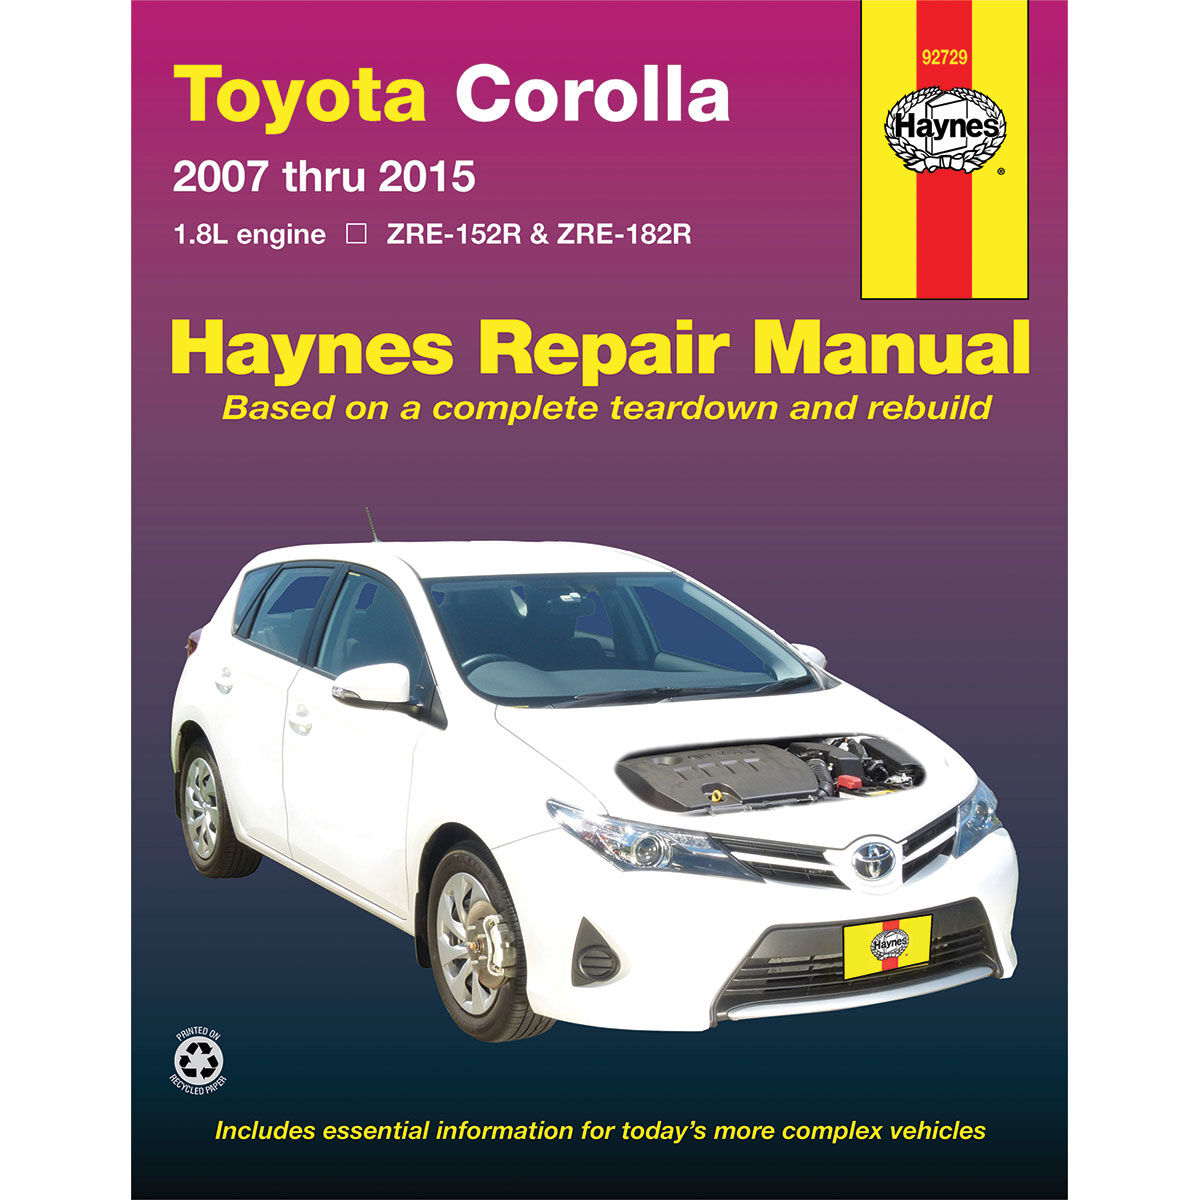 Haynes Car Manual Toyota Corolla, 2007-2015 - 92729, , scaau_hi-res